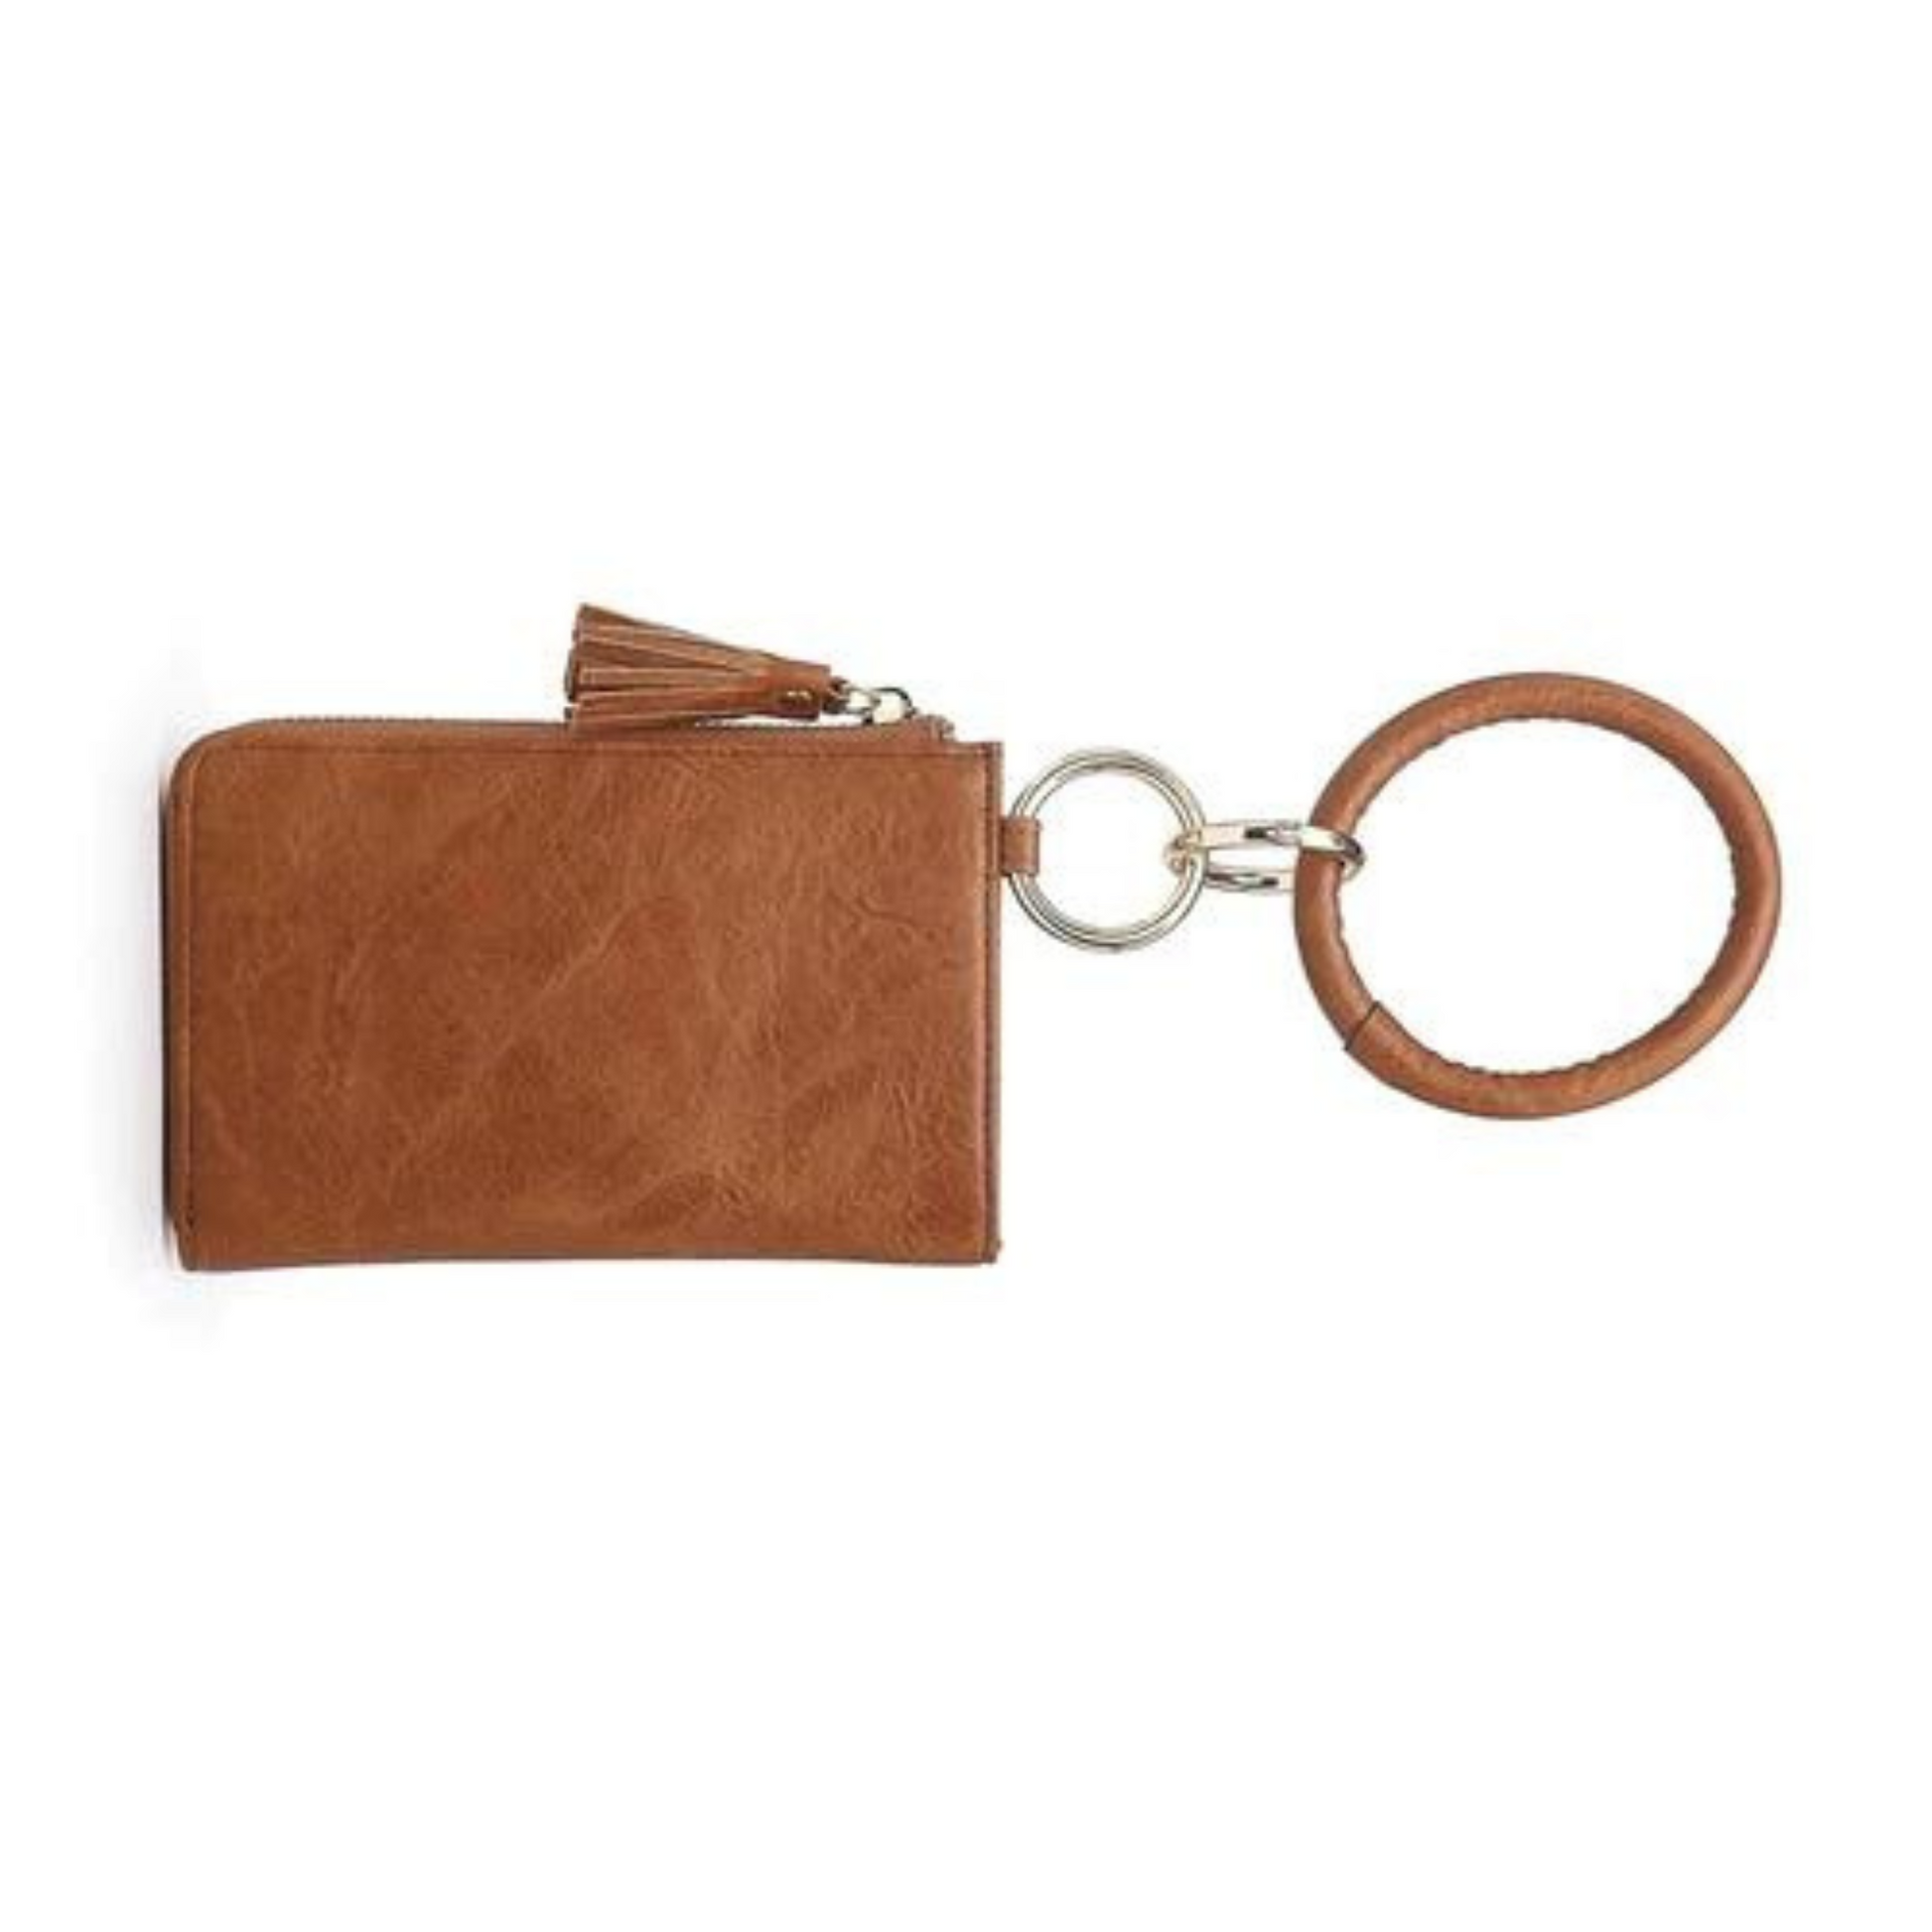 Brown Wristlet Bangle Wallet from Jen & Co.